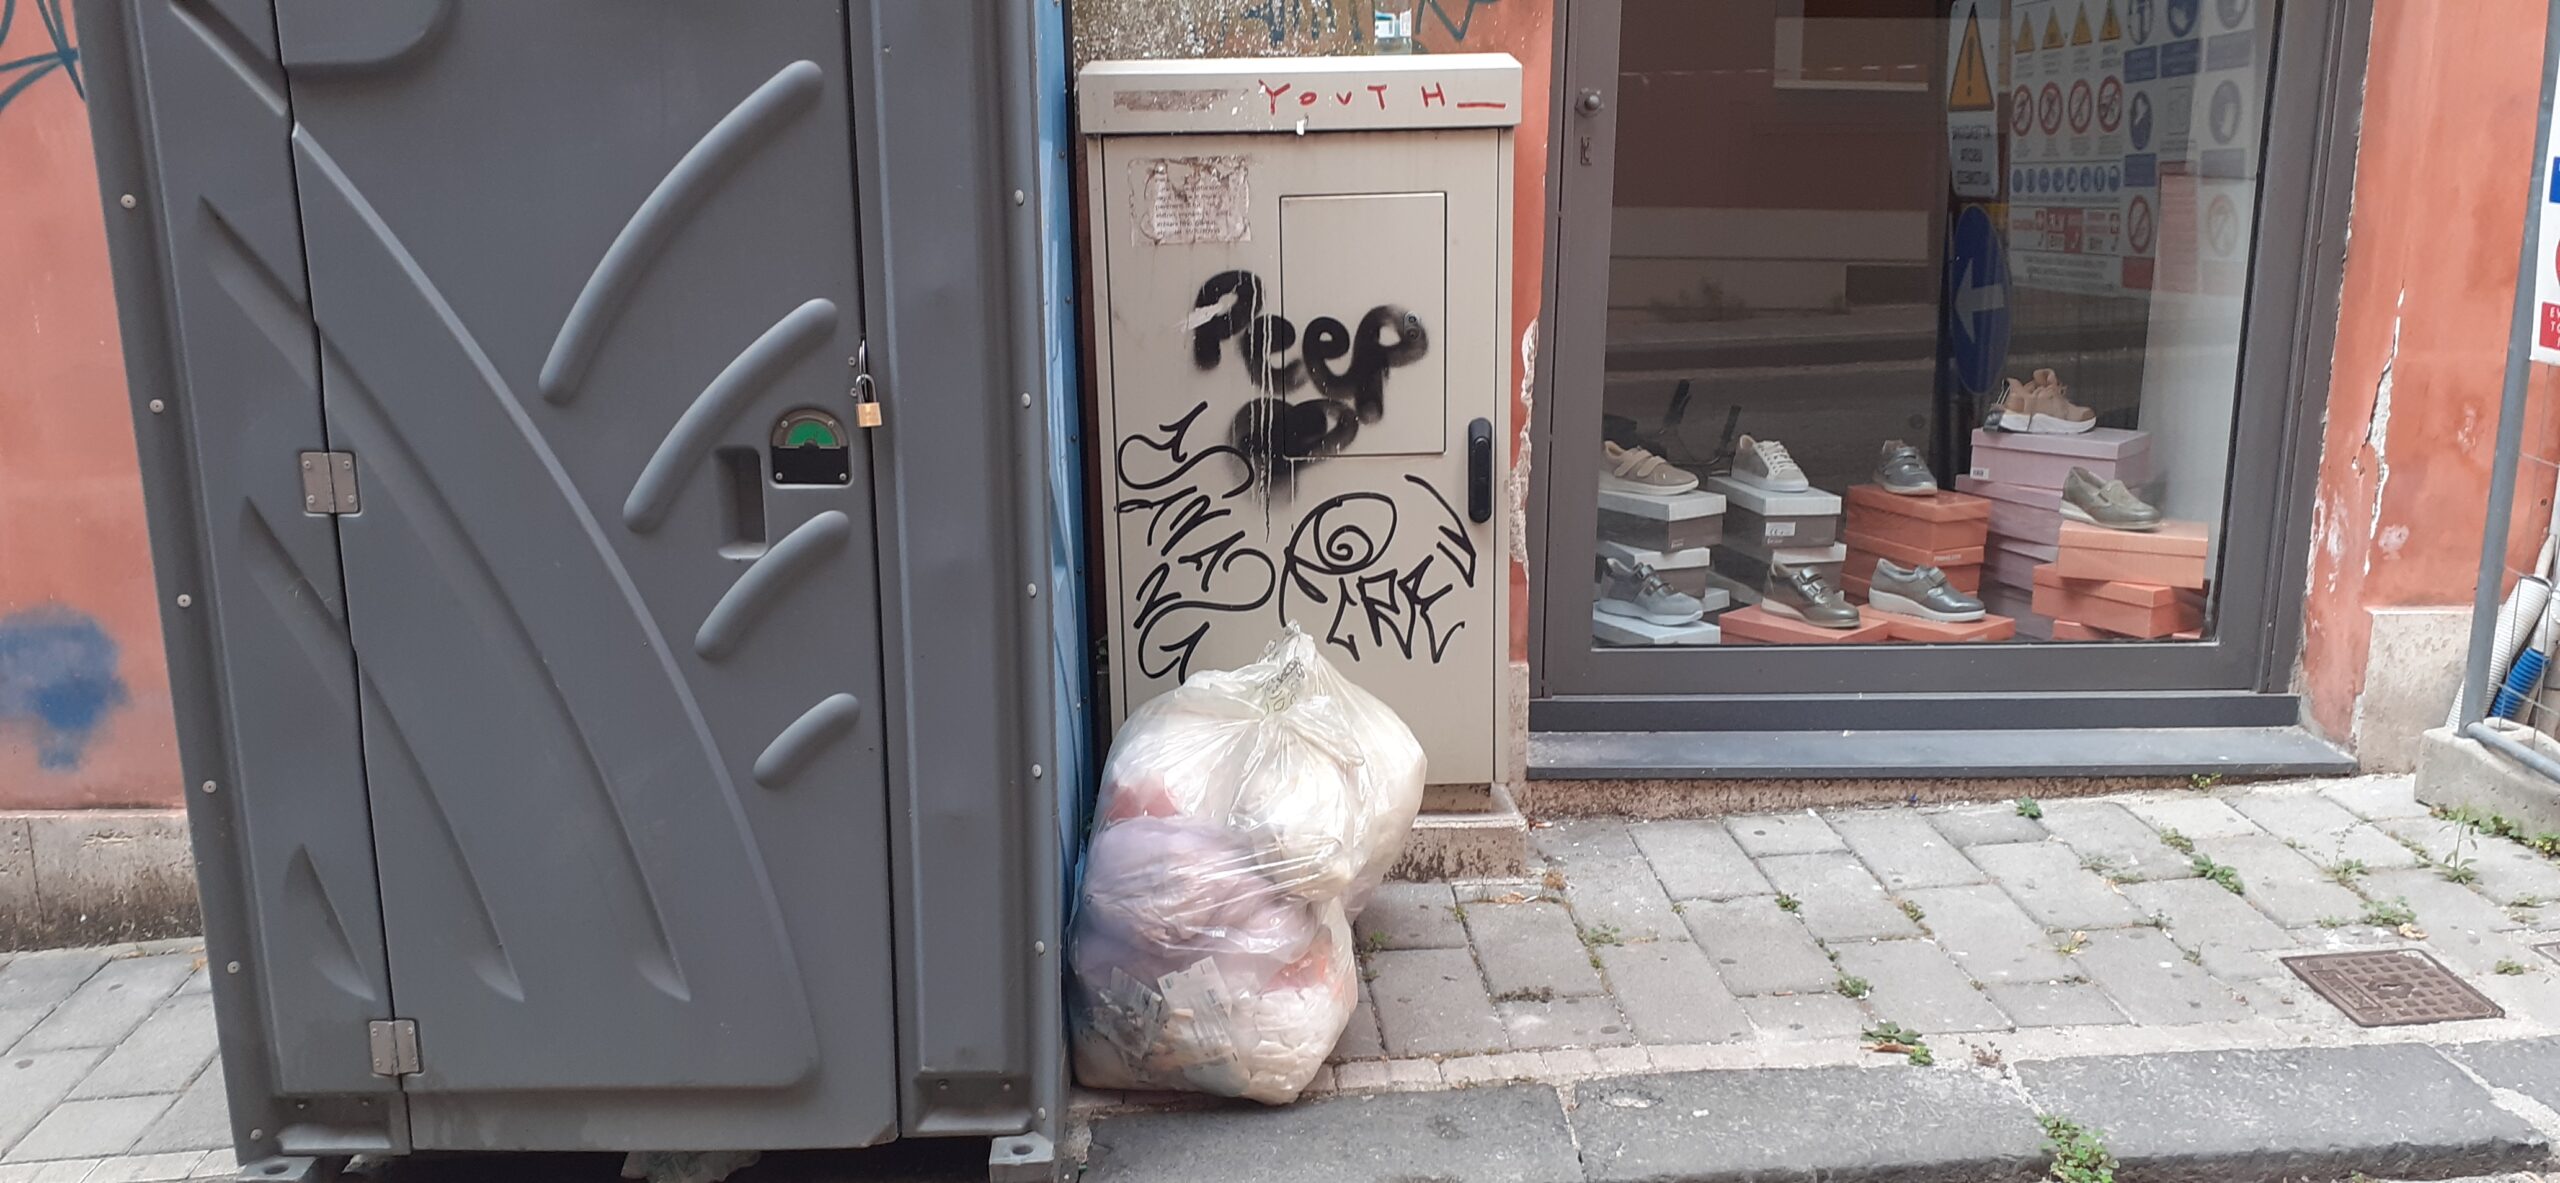 Salerno: città invasa da topi, blatte e rifiuti, sdegno anche d’immigrati